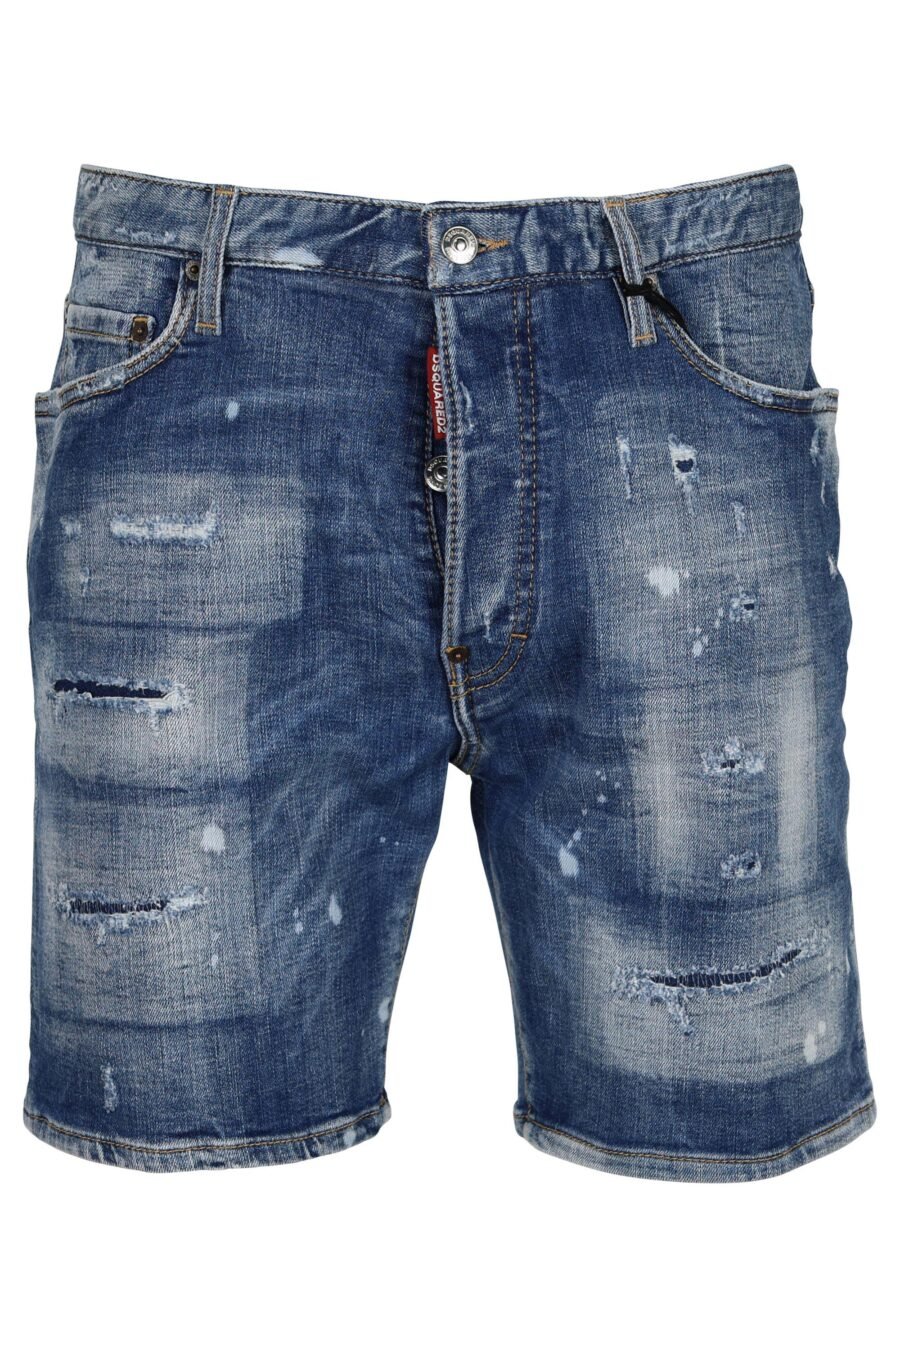 Light blue denim shorts "marine short" with rips and frayed - 8054148340193